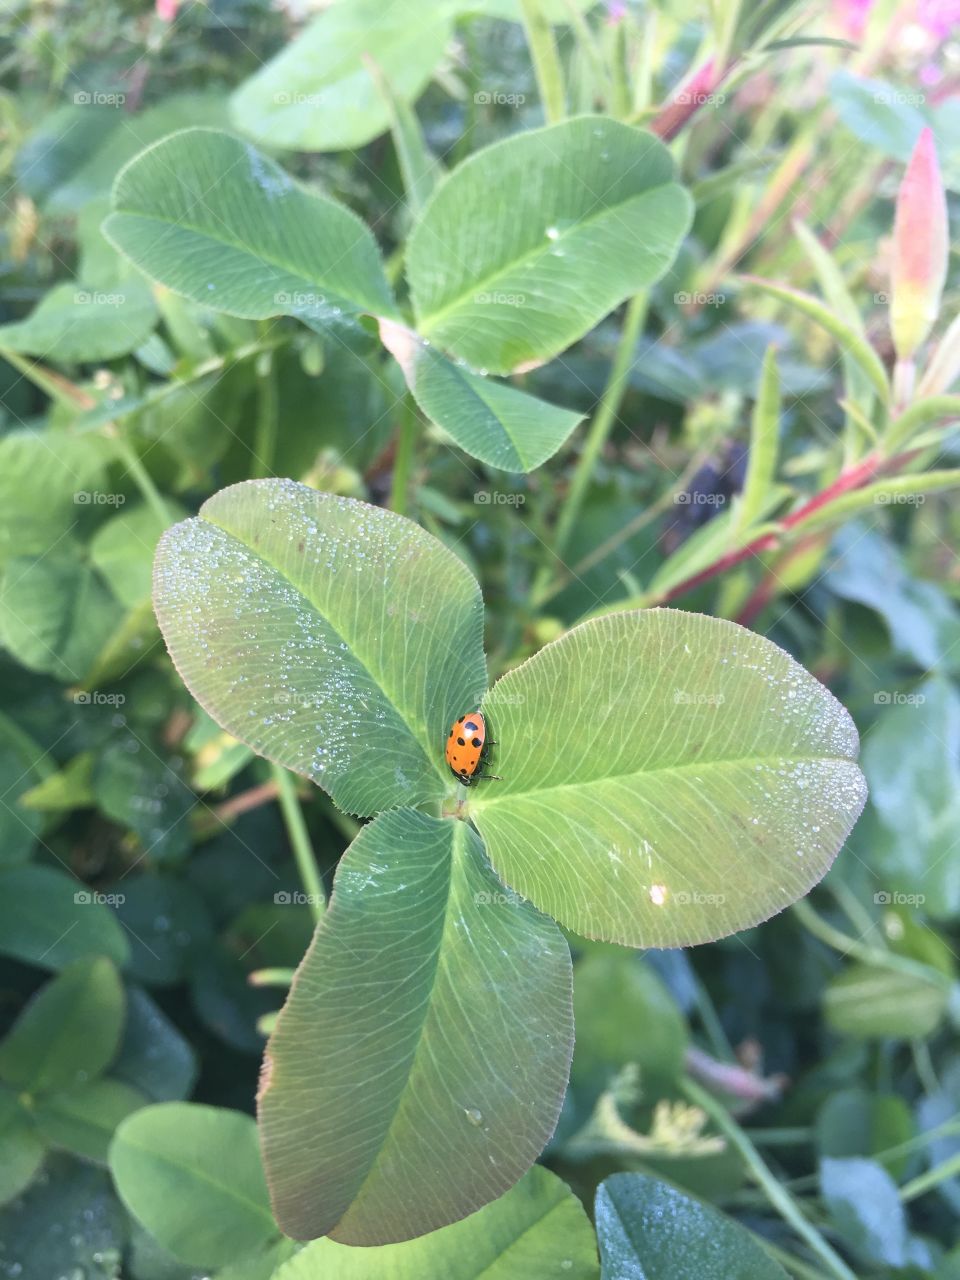 Ladybug on clover in morning dew